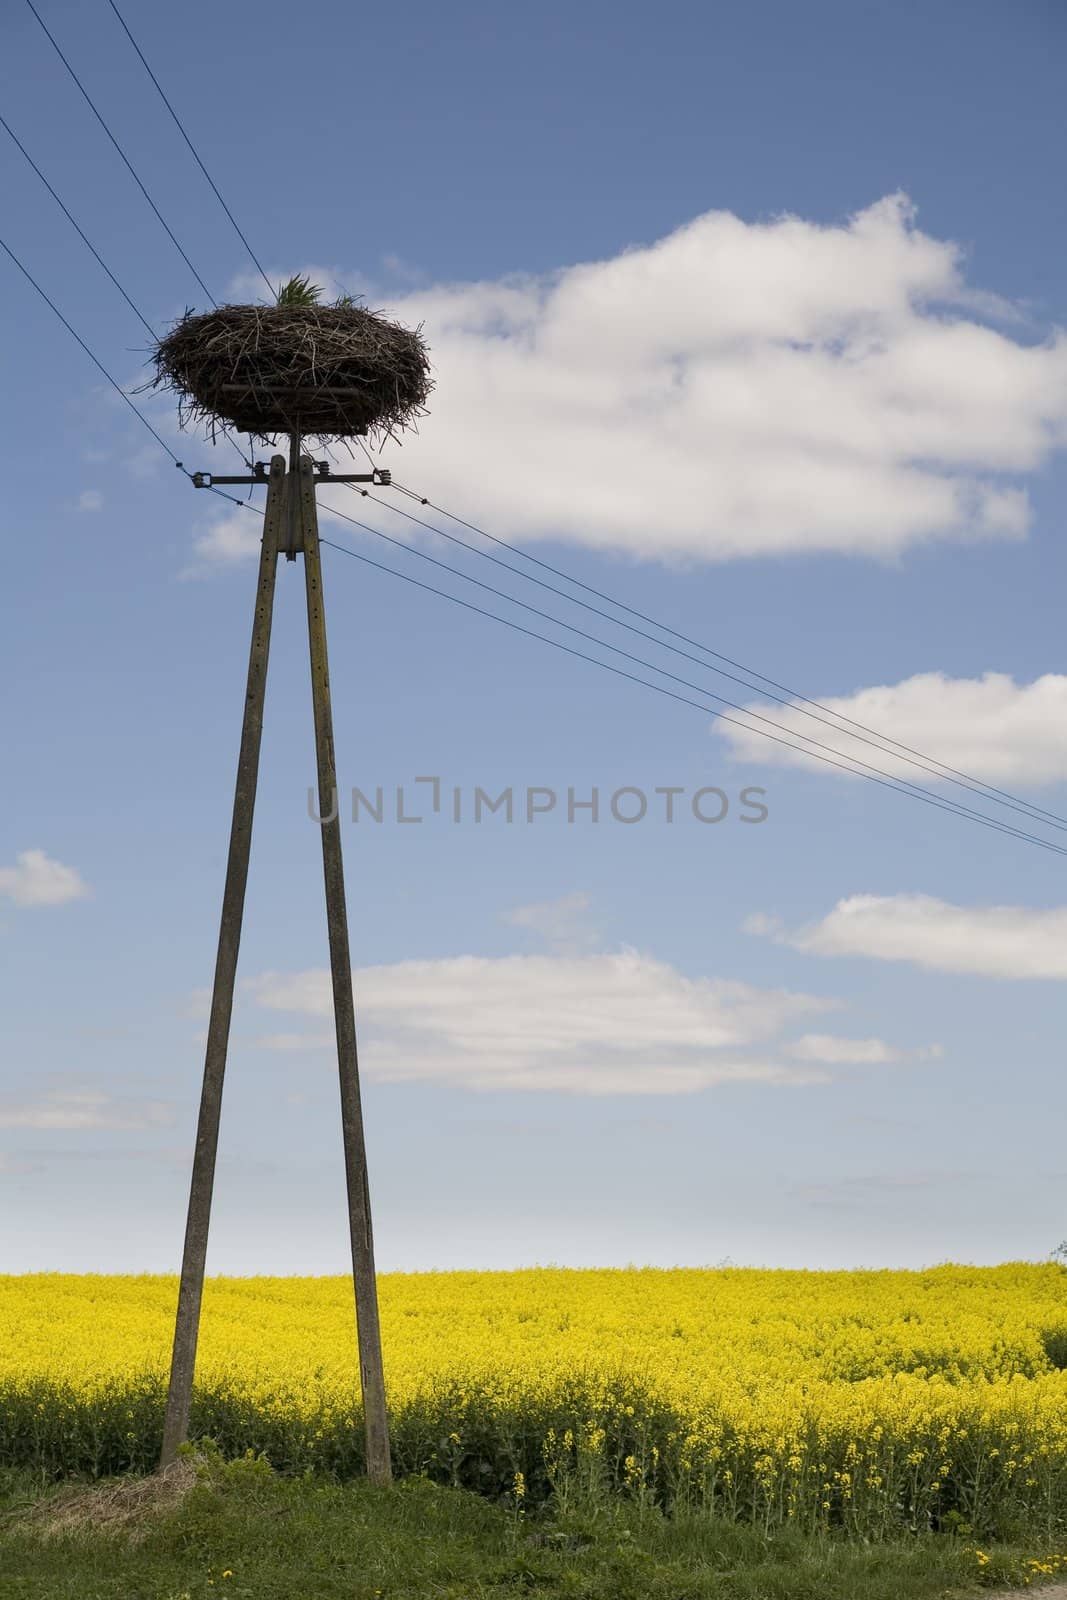 stork's nest on the pole over cloudy sky and rape field